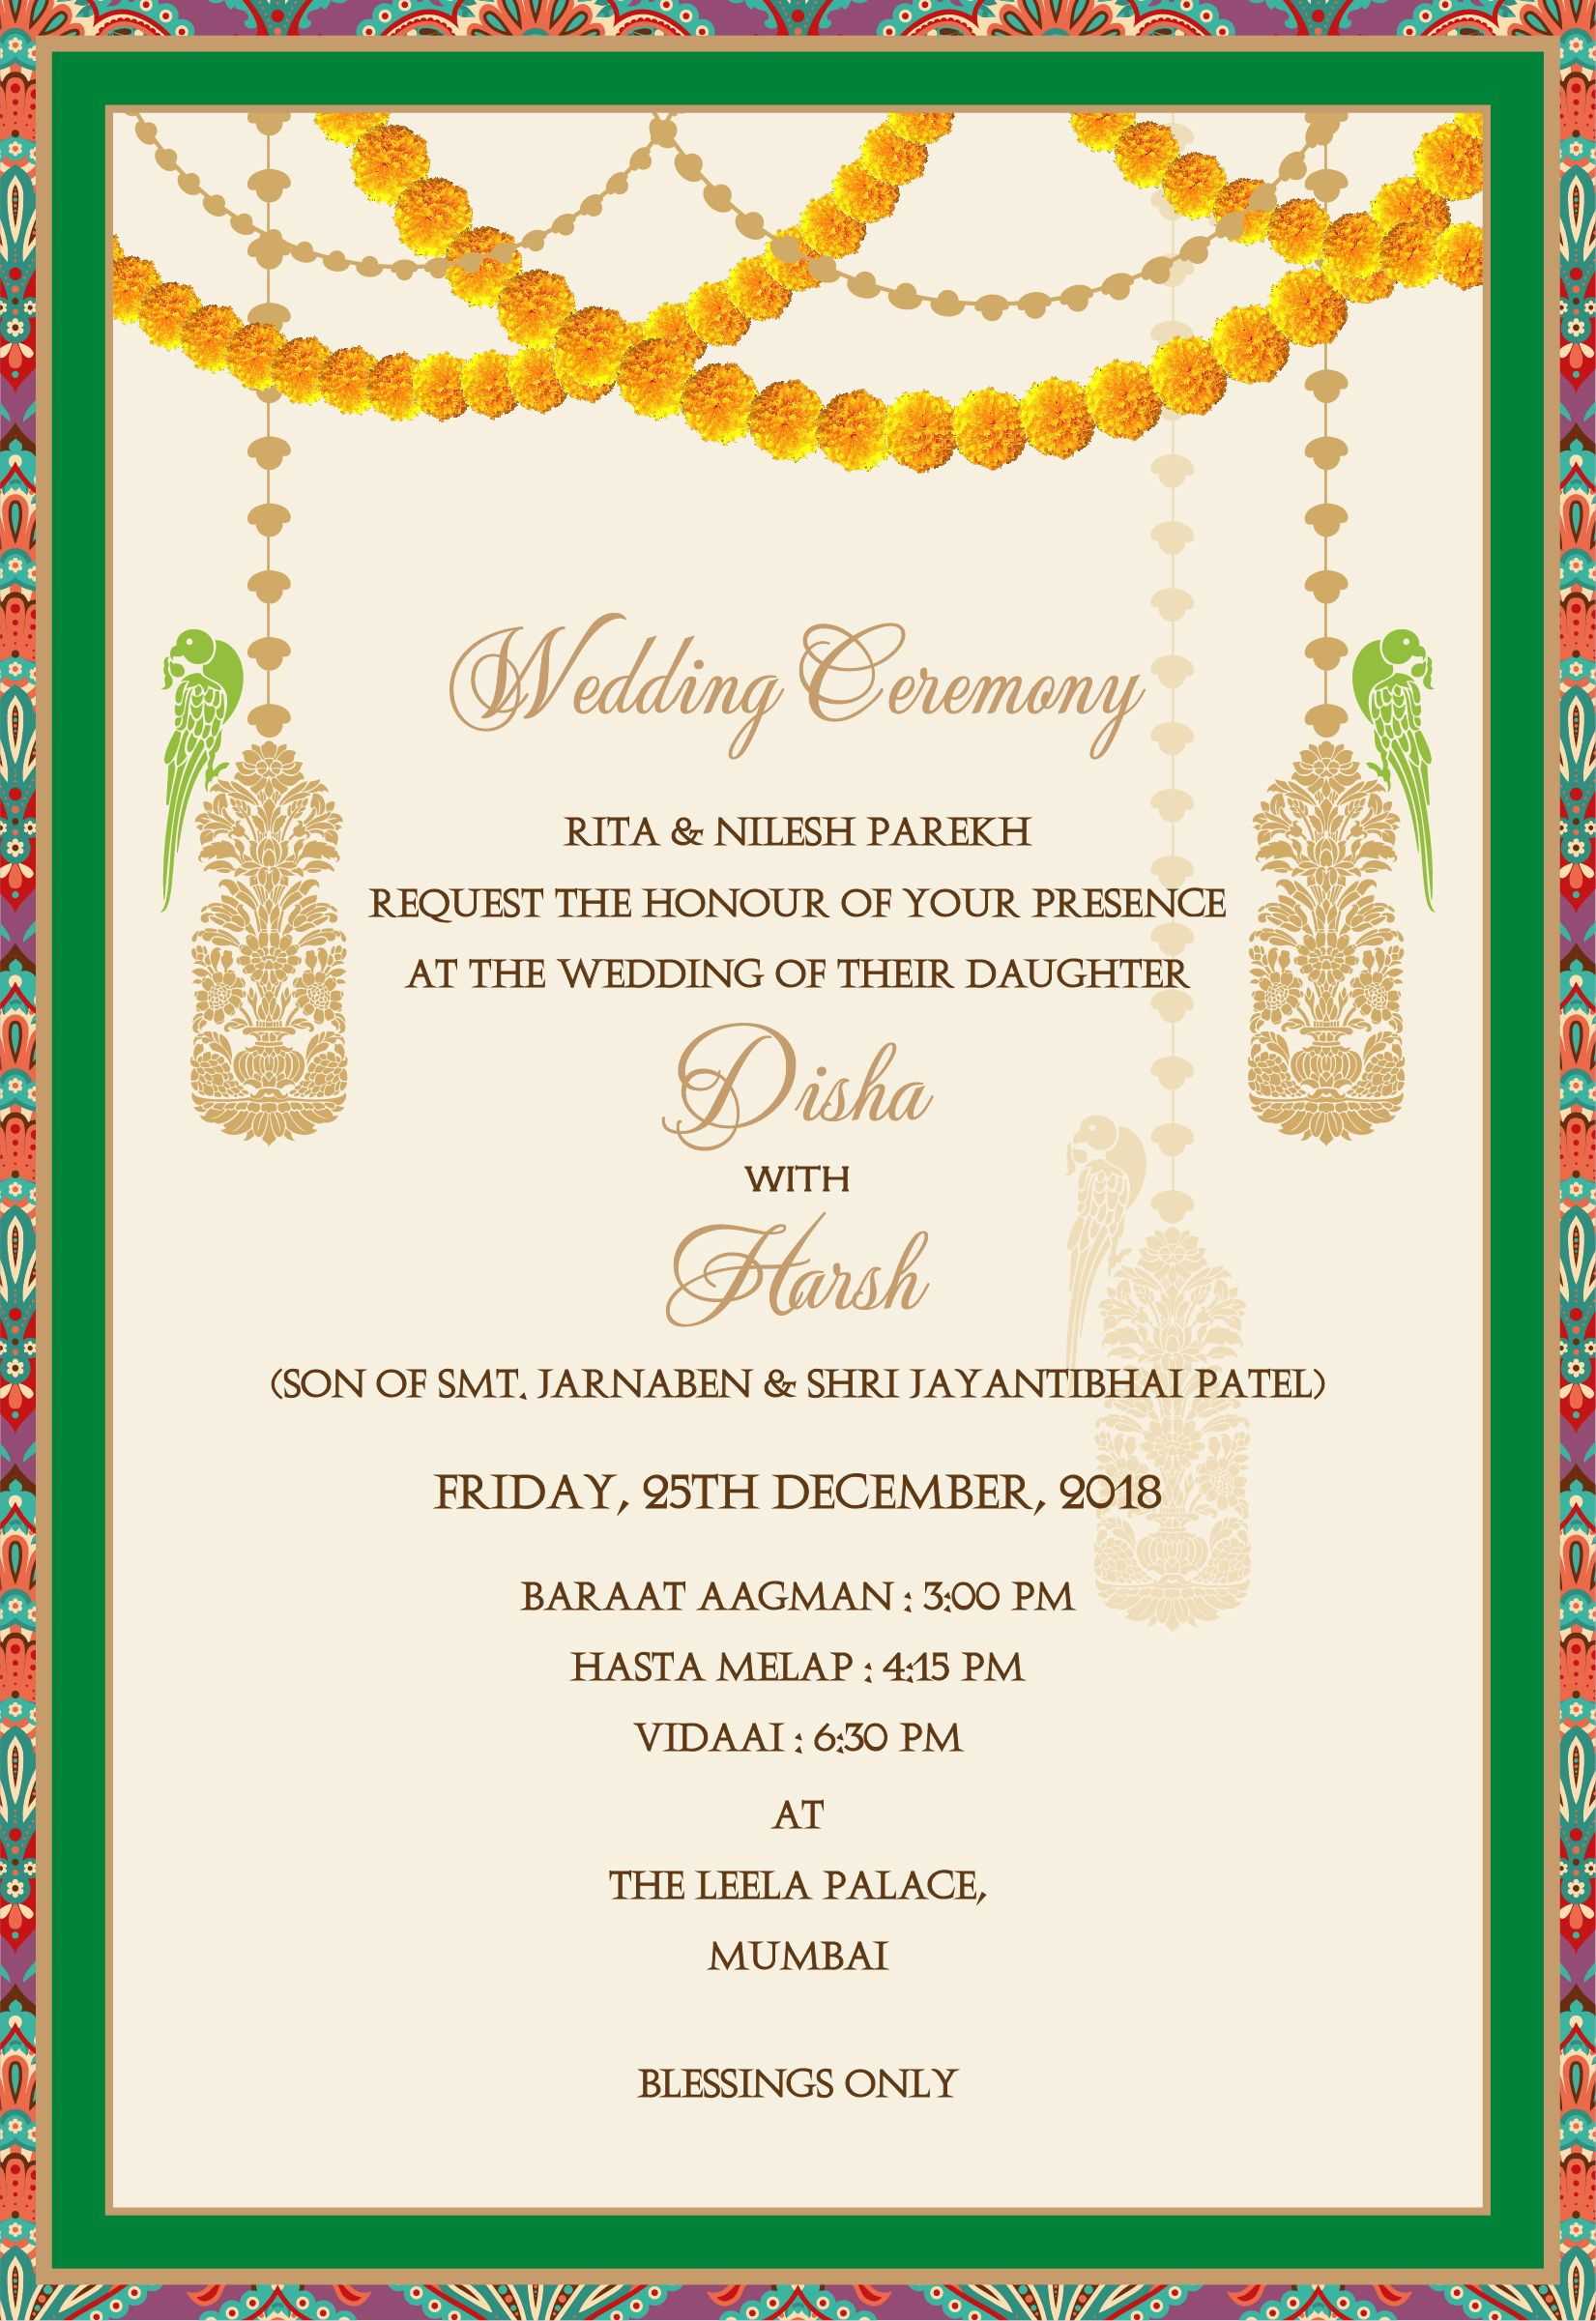 Wedding Invitation Cards, Indian Wedding Cards, Invites In Indian Wedding Cards Design Templates